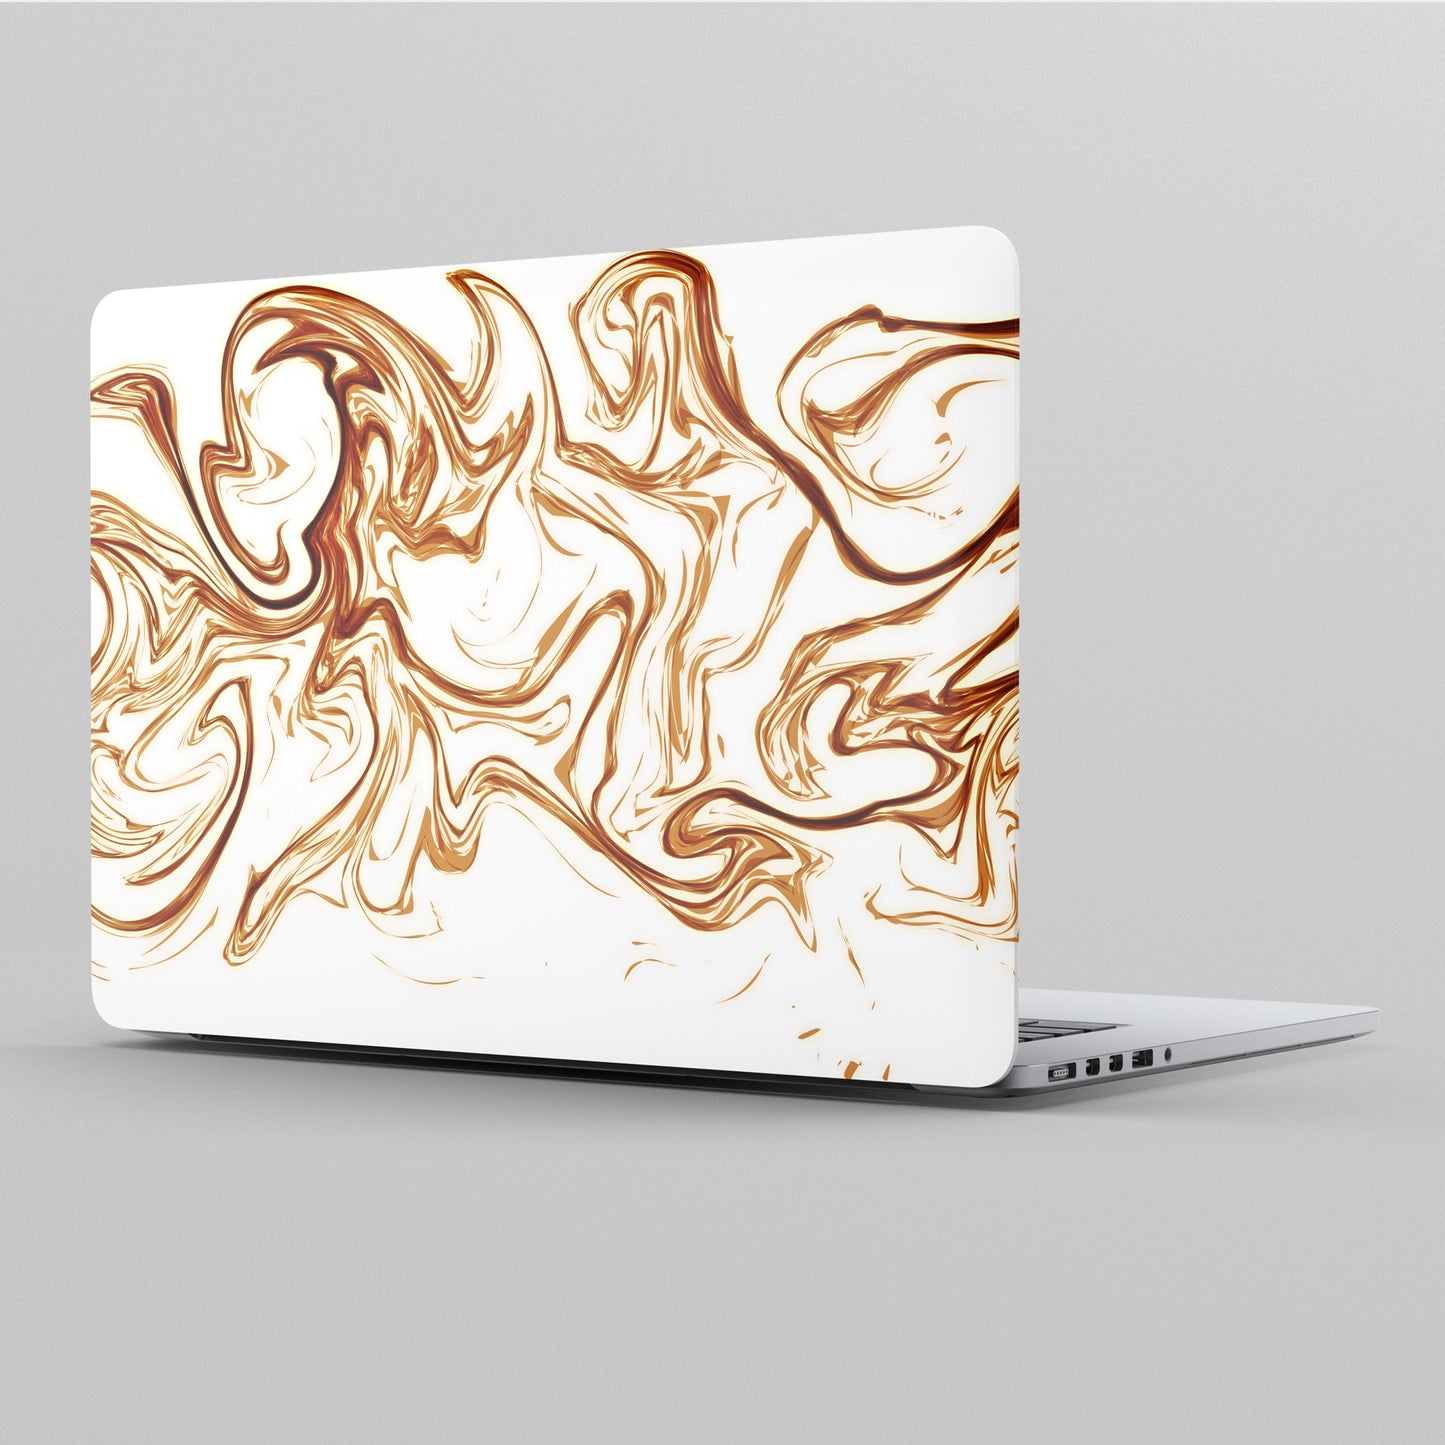 Wrapie Coffee Brown Wavy Art Laptop Skin